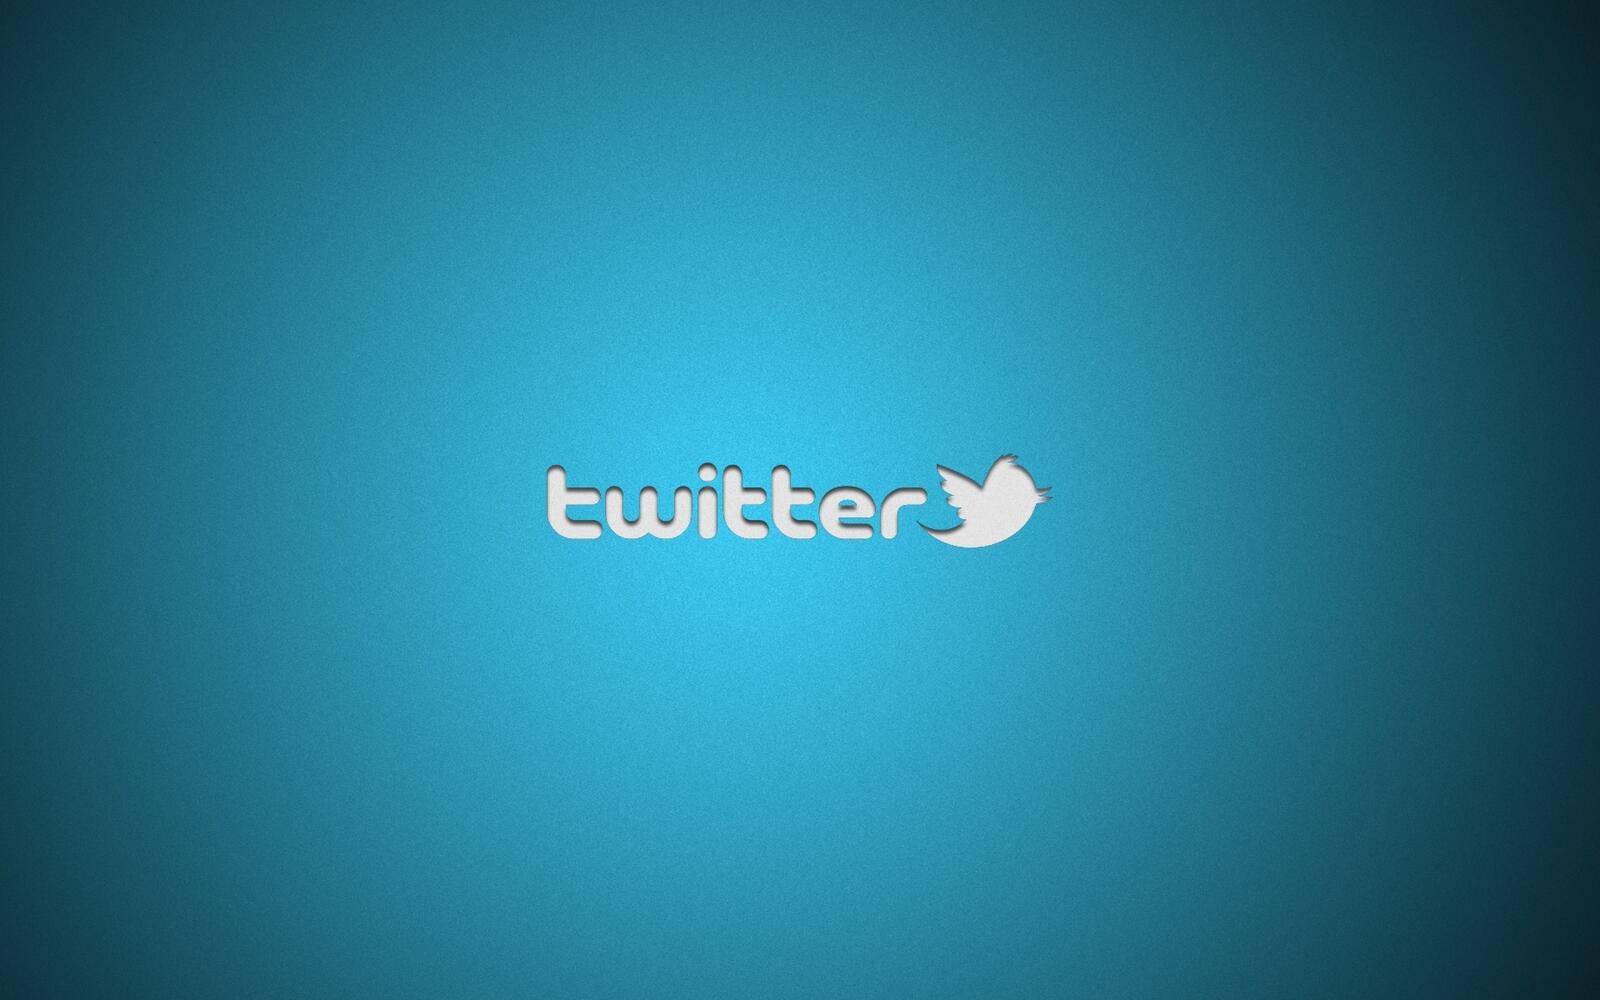 Wallpapers twitter logo inscription on the desktop